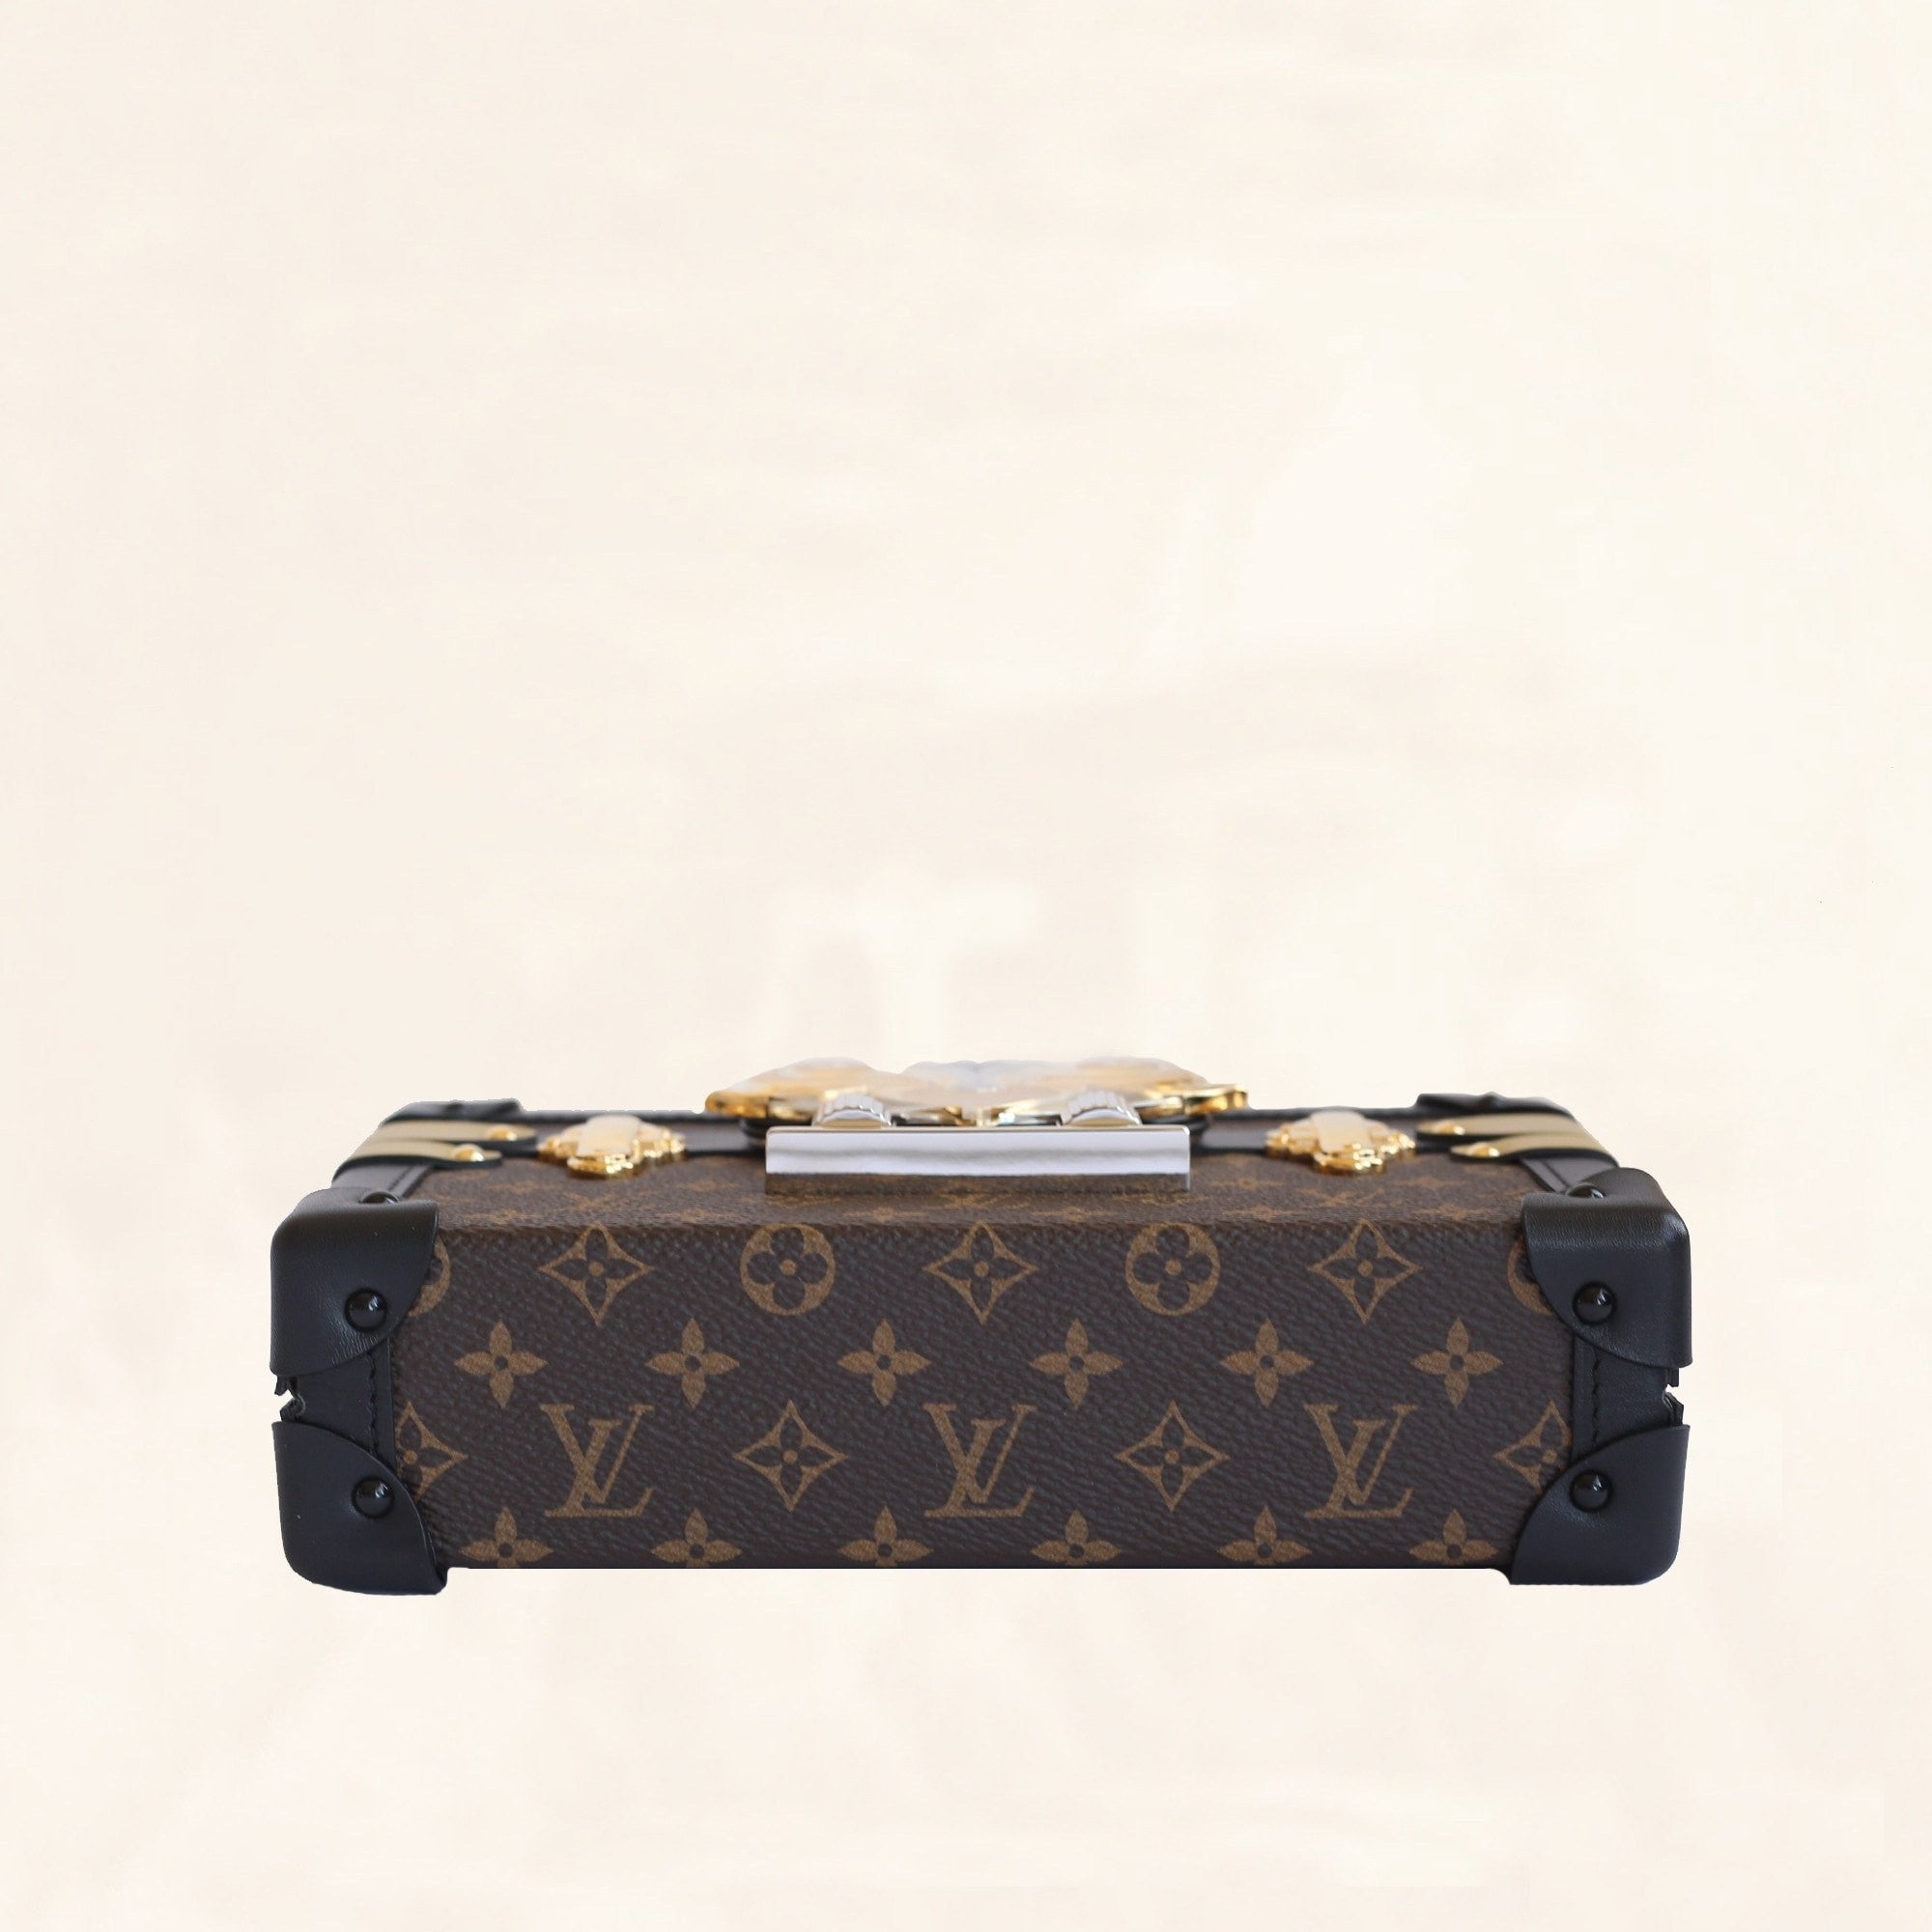 Louis Vuitton Petite Malle Bag in Monogram with Golden Brass Hardware